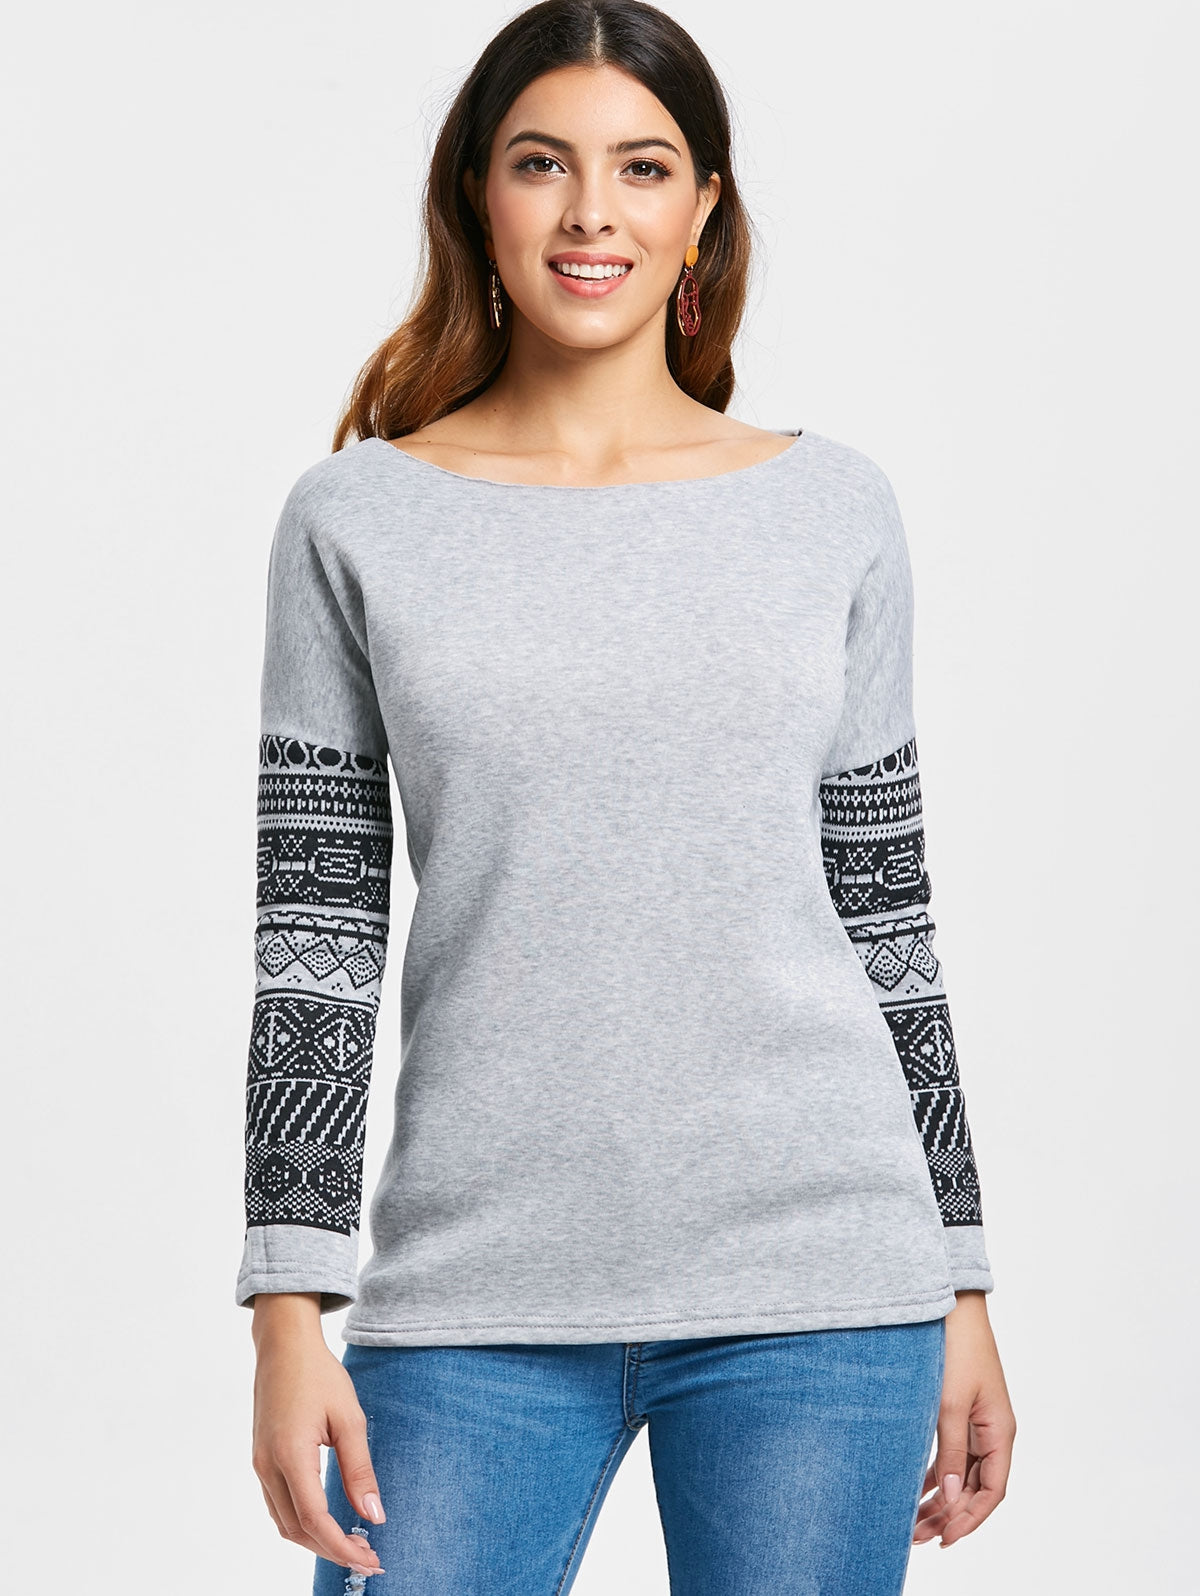 Casual Scoop Neck Geometric Print Spliced Thick Sweatshirt For Women